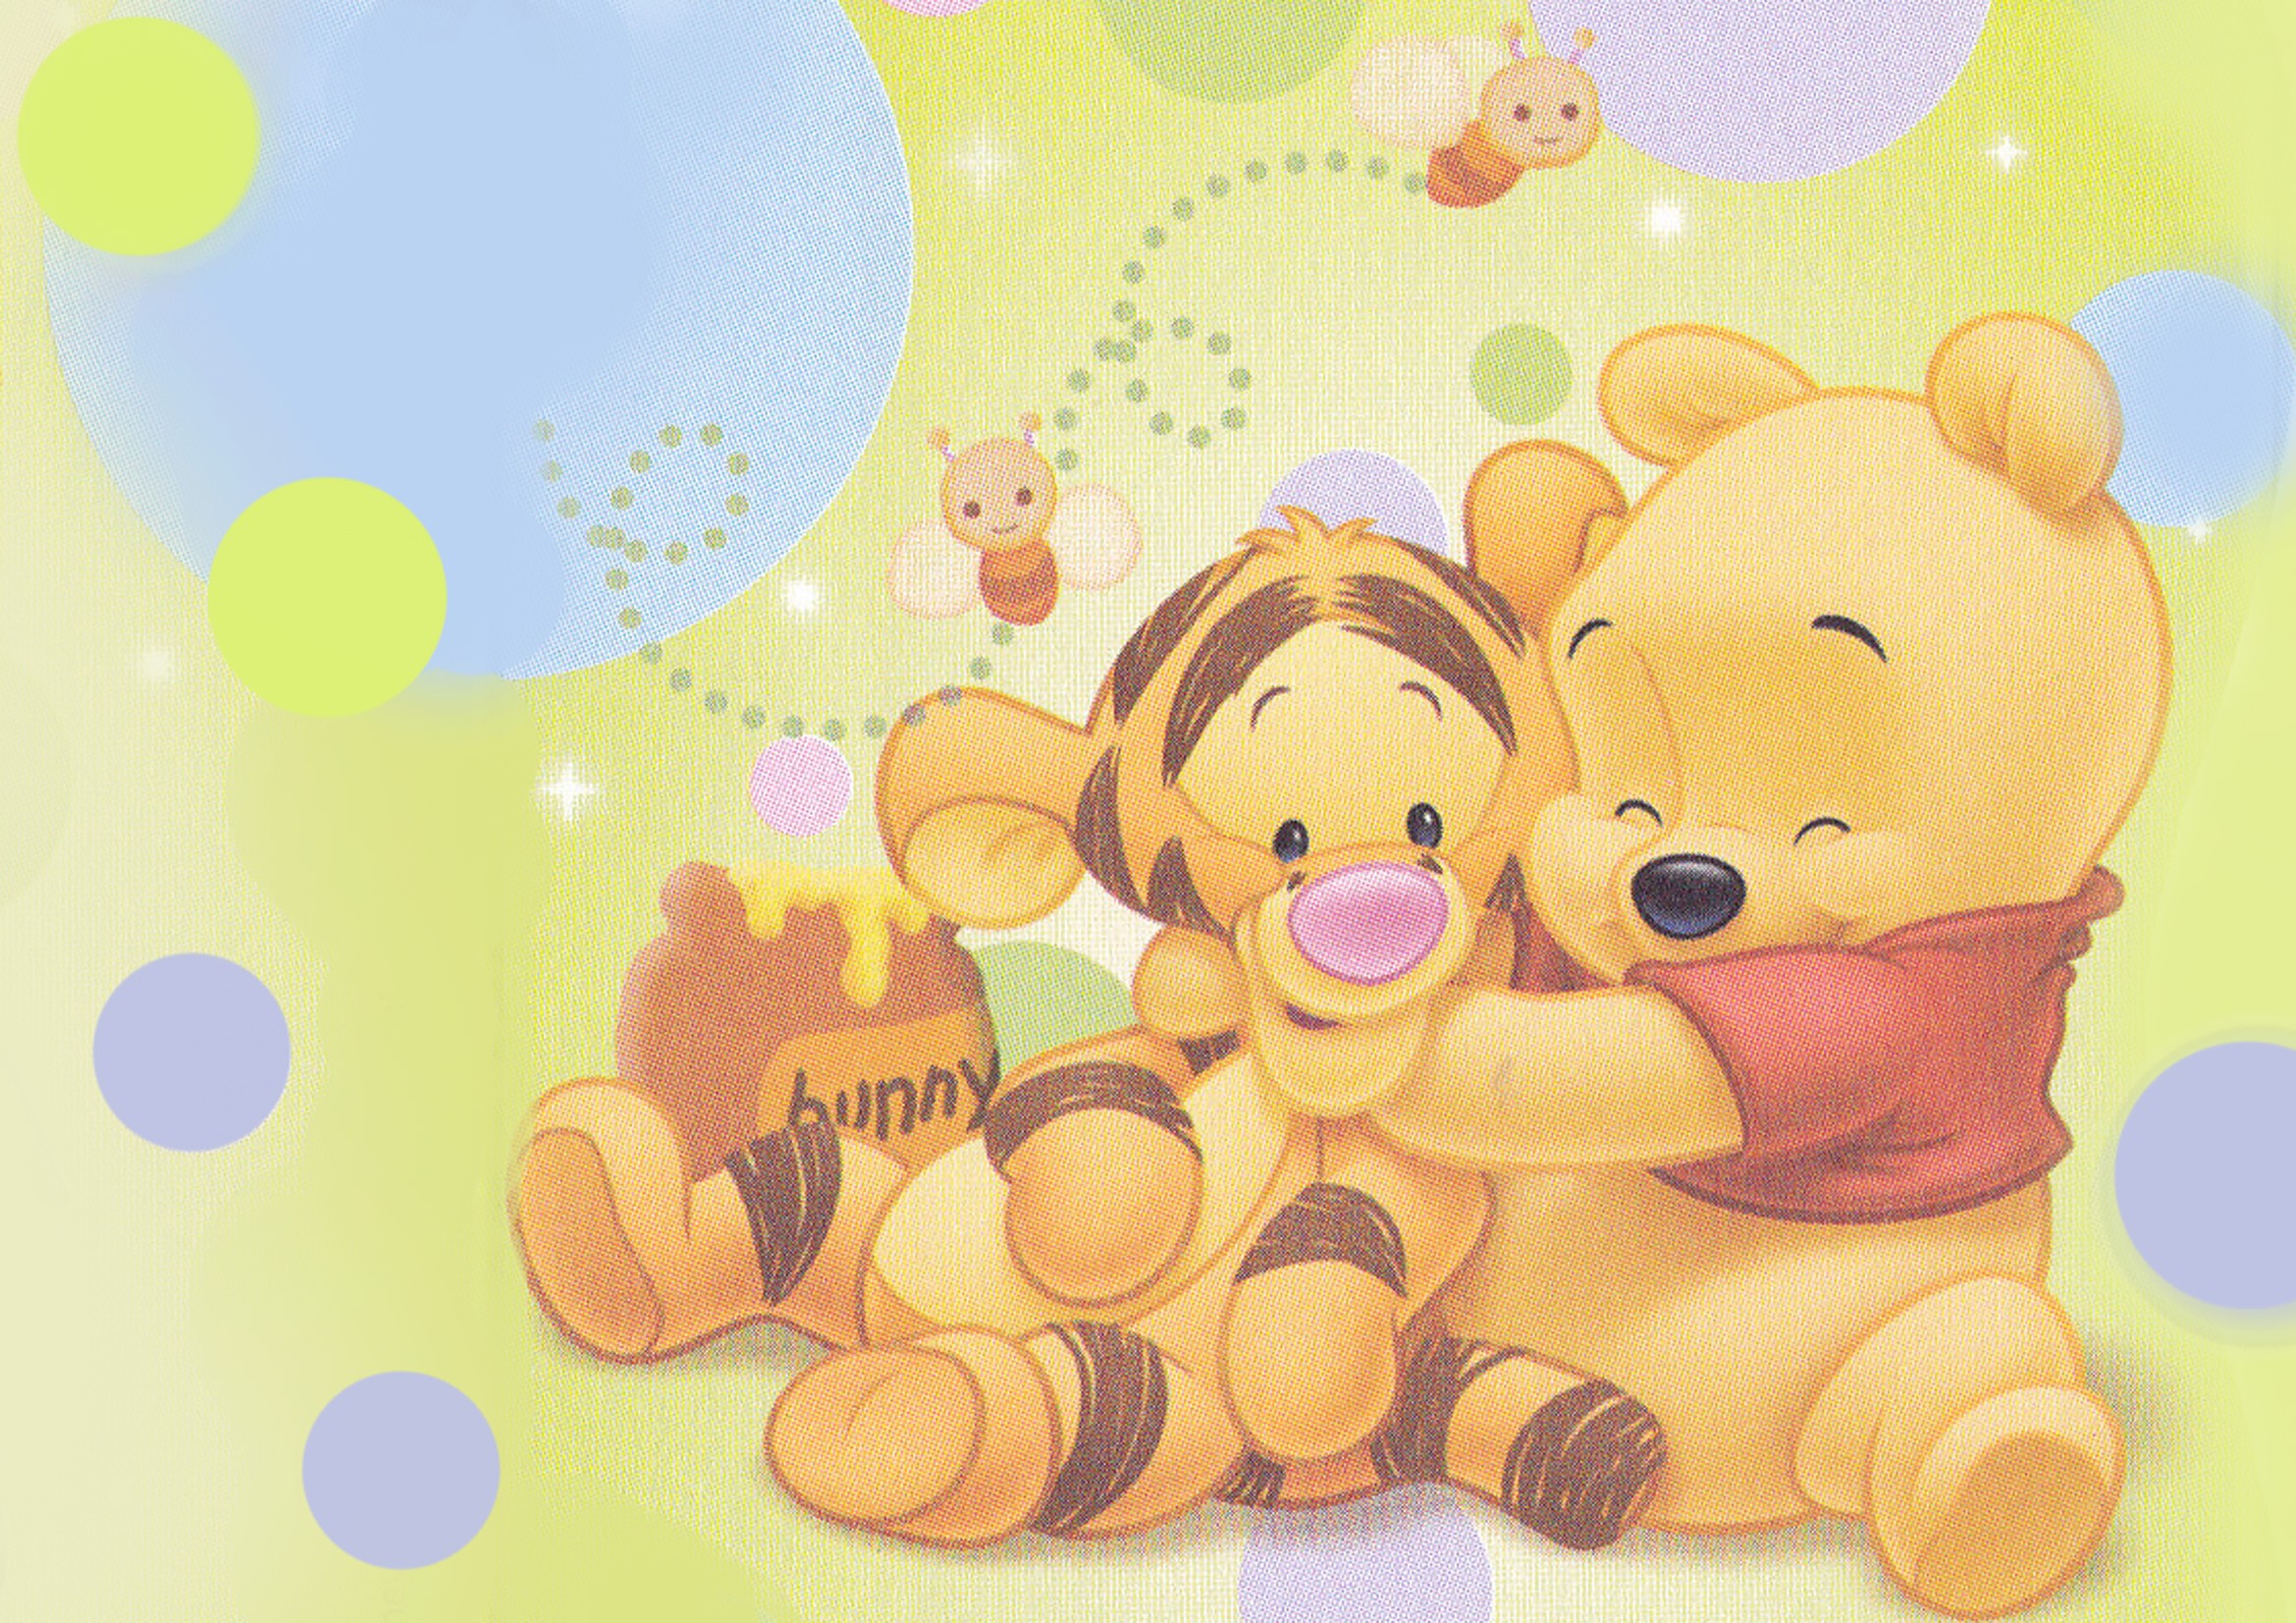 Baby Pooh Image Wallpaper HD And